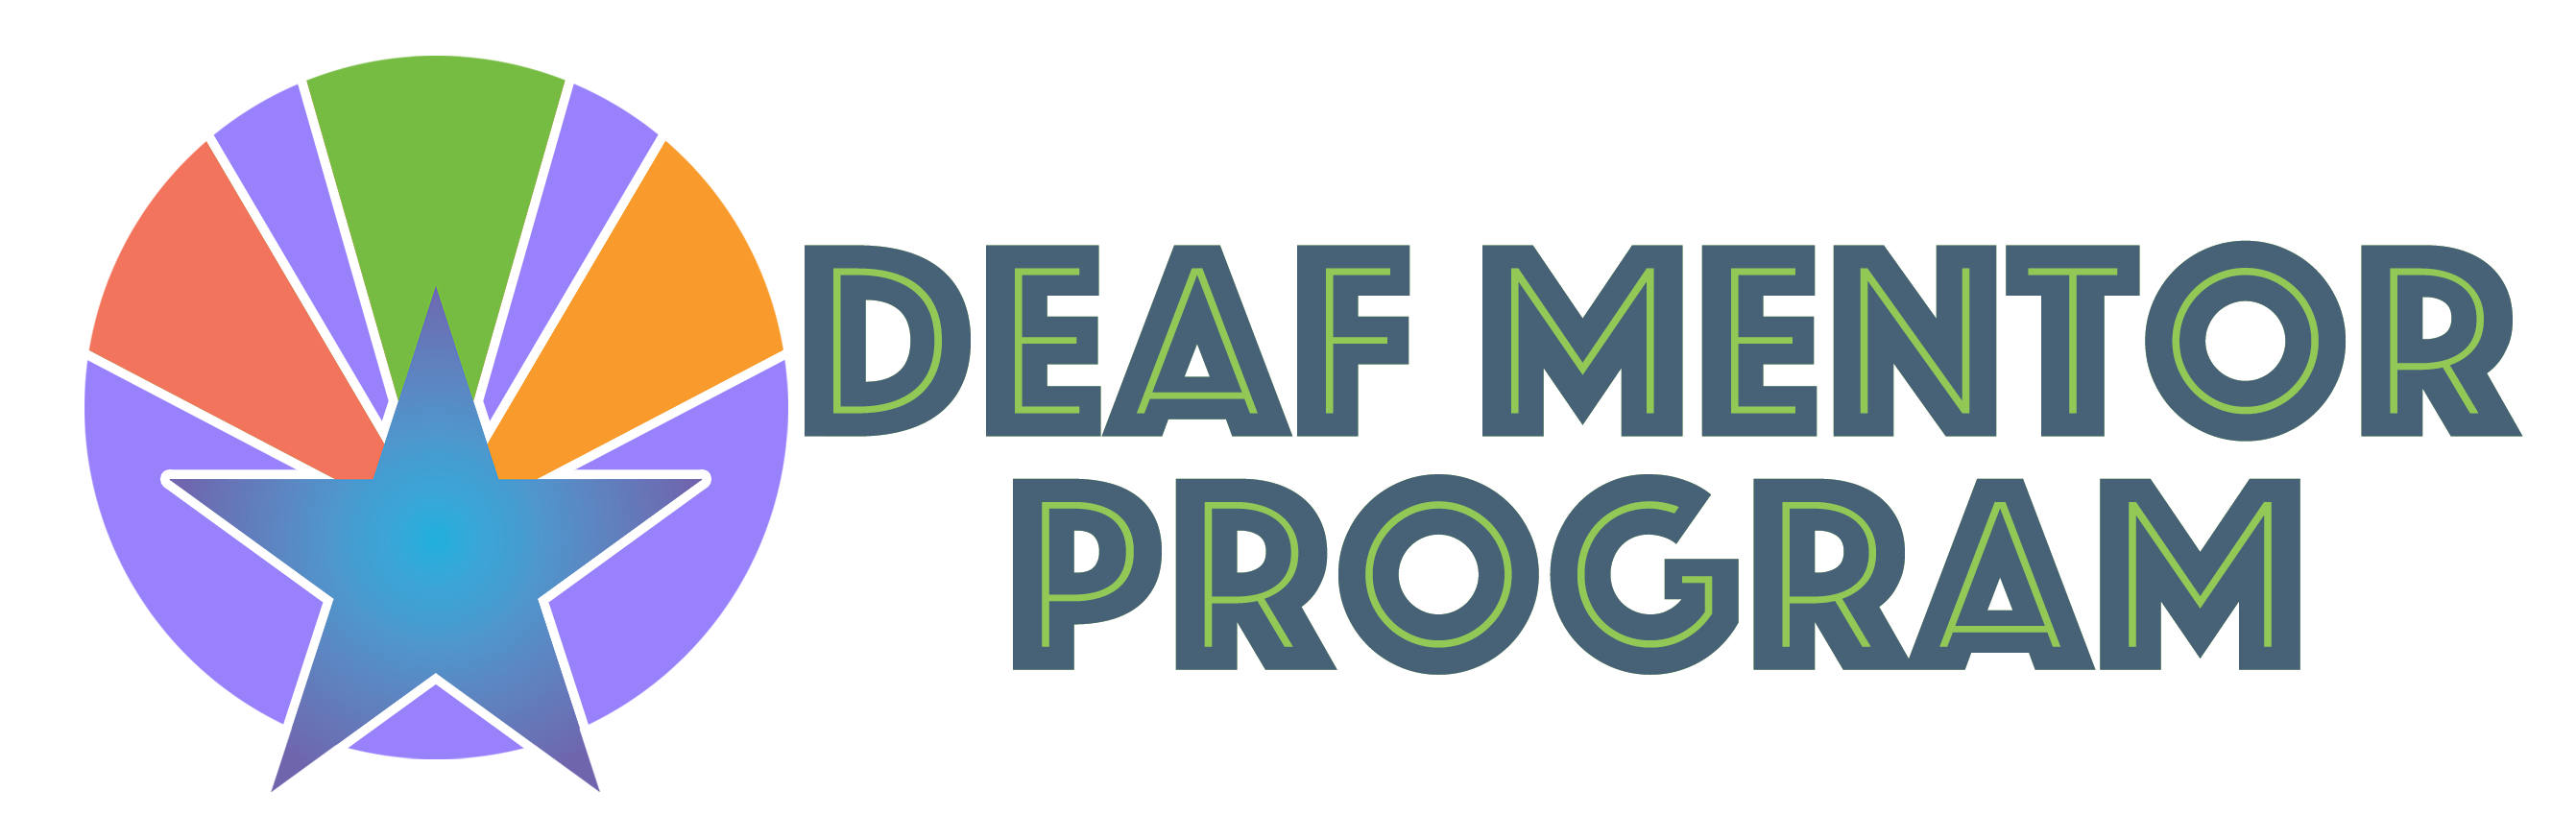 The Deaf Mentor Program logo